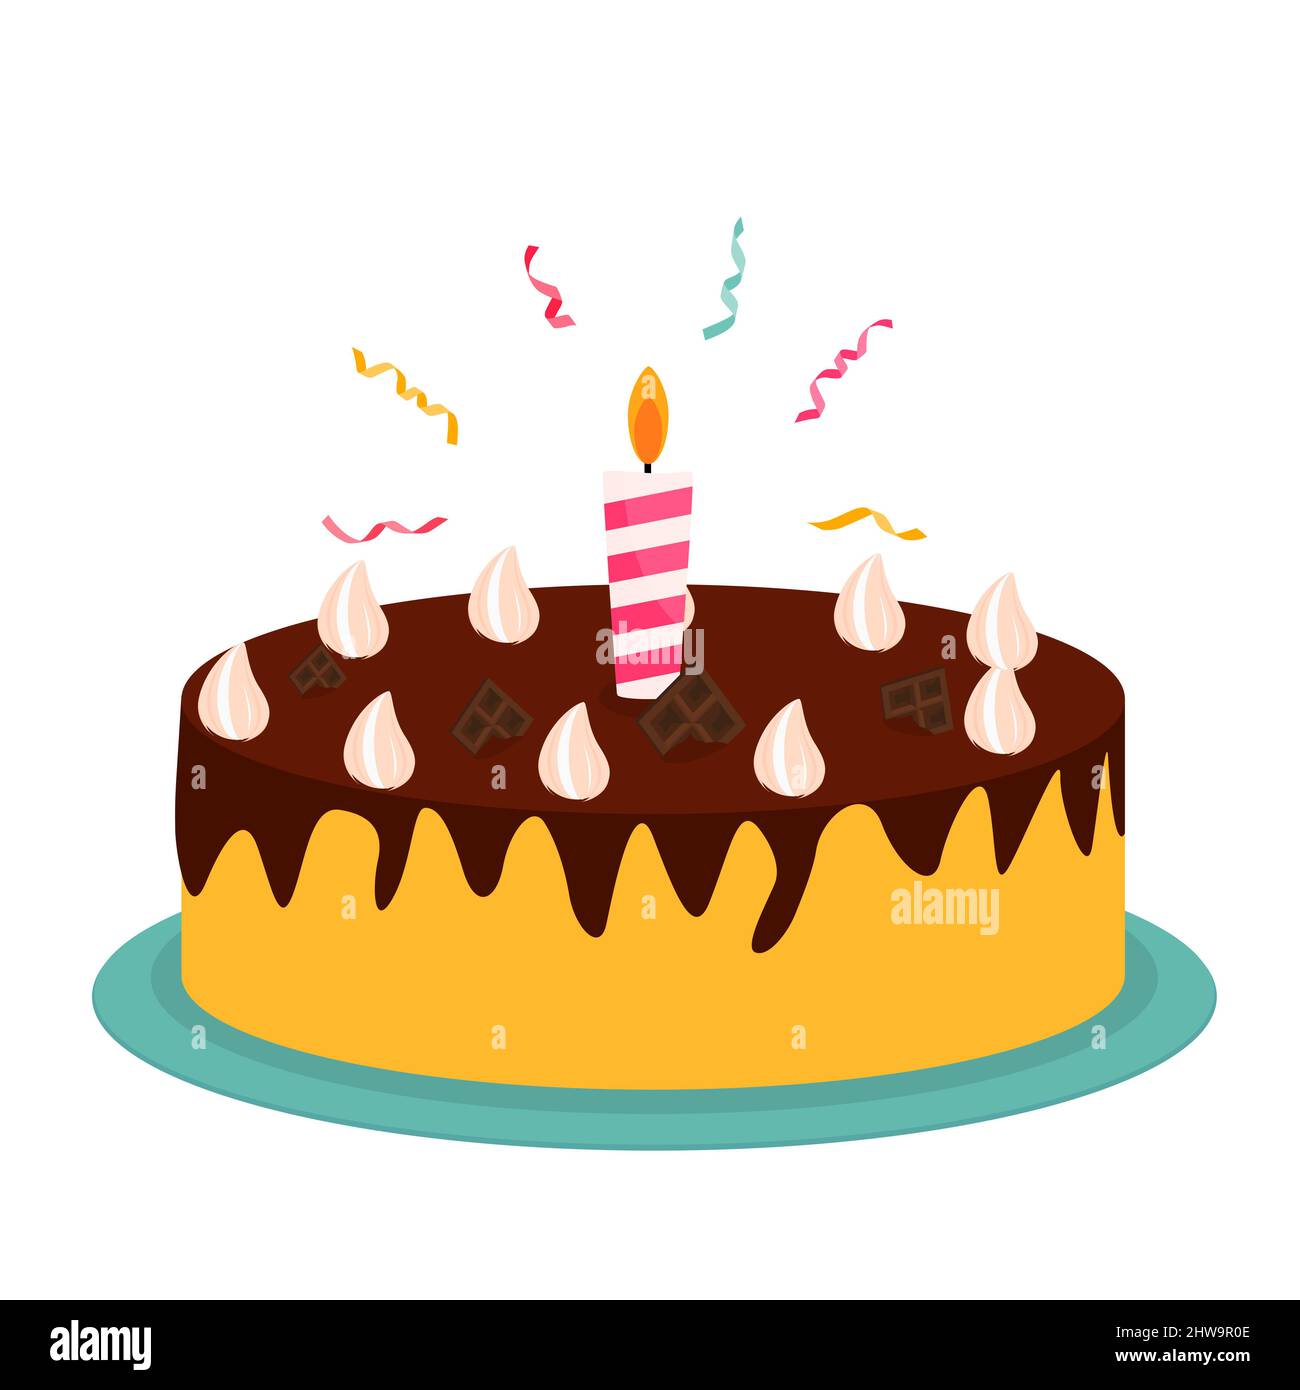 Birthday Cake Clipart Images - Free Download on Freepik